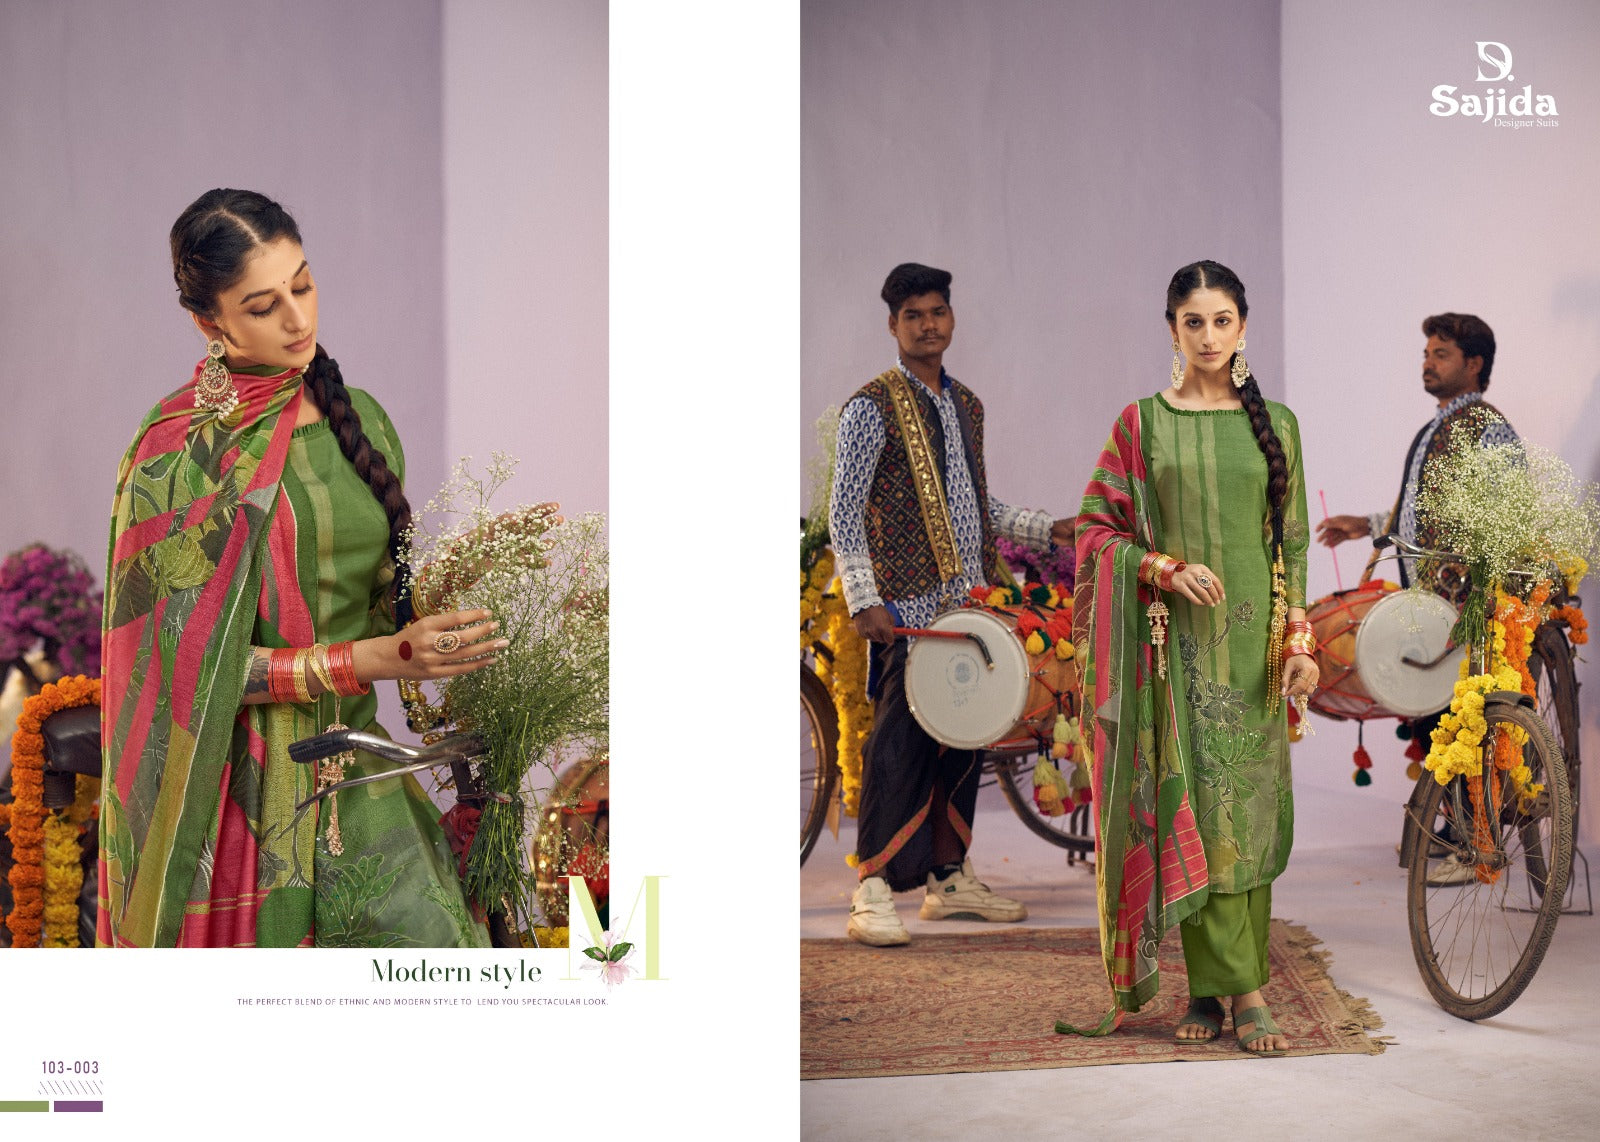 Sajida Designer Suits Rezinaa Viscose Digital Print With Handwork Salwar Suit Partywear Suits For Women